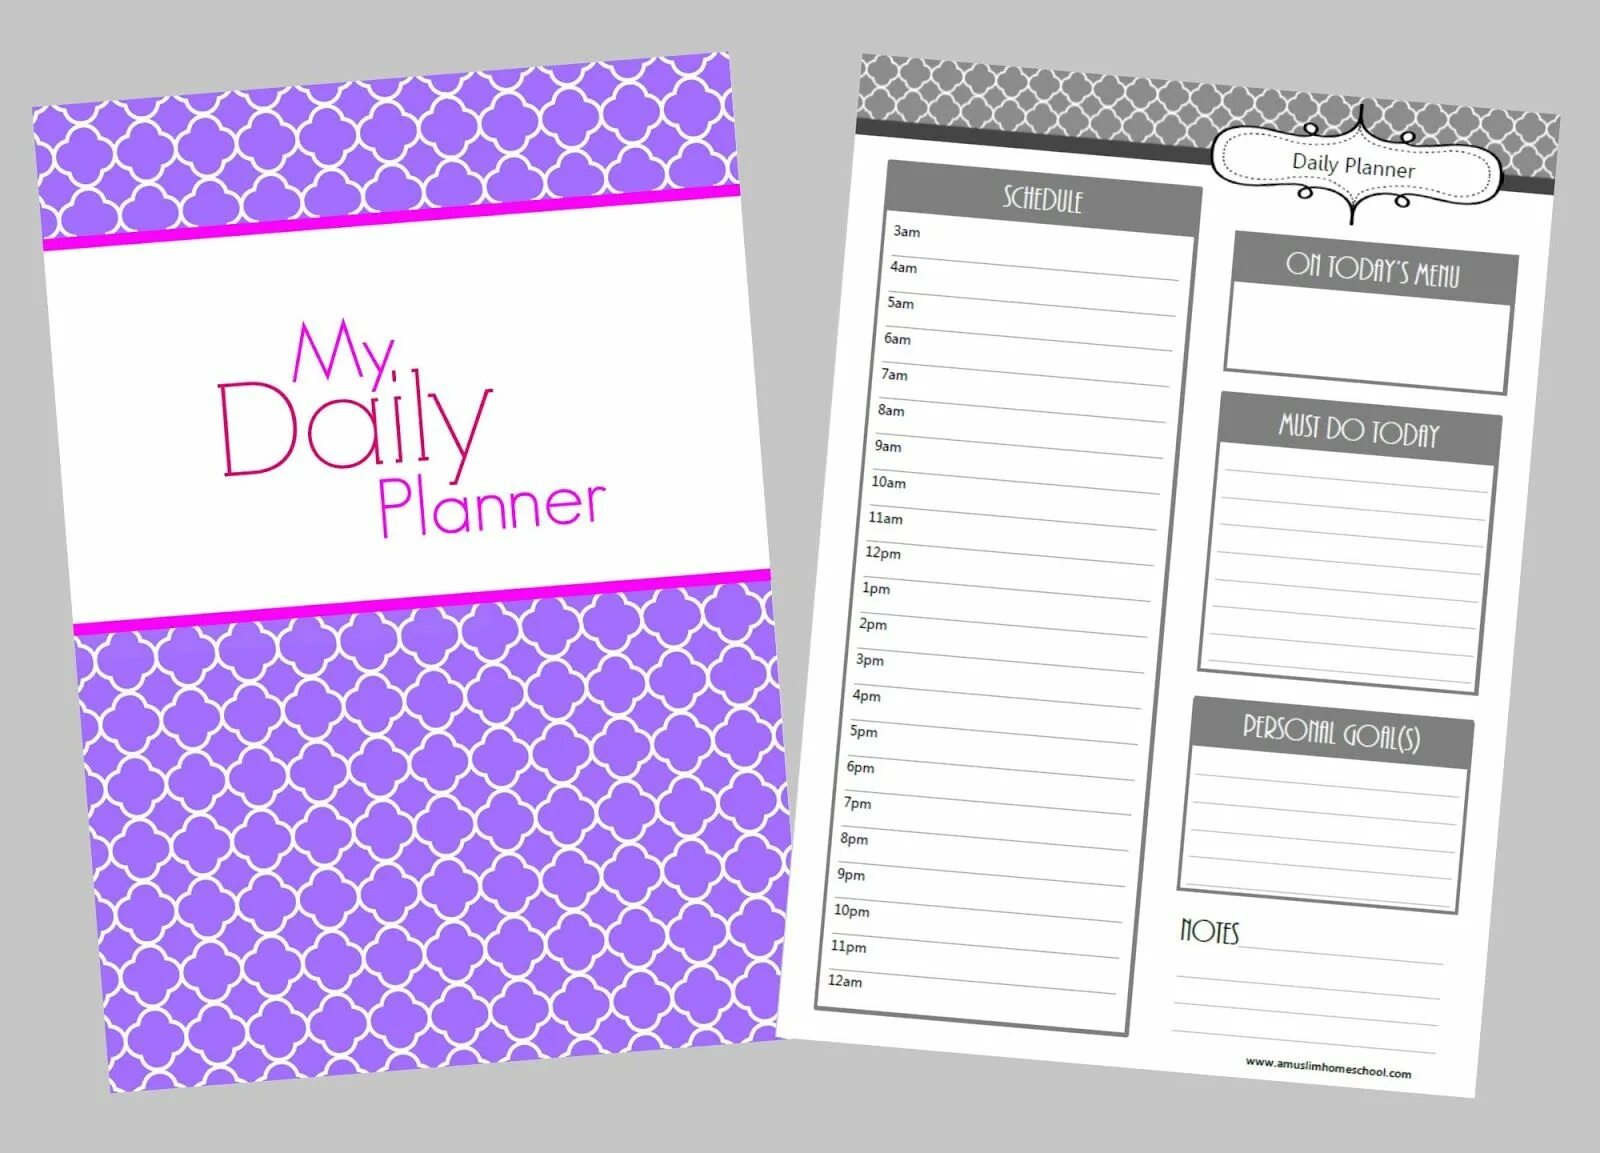 Daily plans. Daily Planner. Daily Planner для печати. Daily Planner шаблон. Планер для учебы.